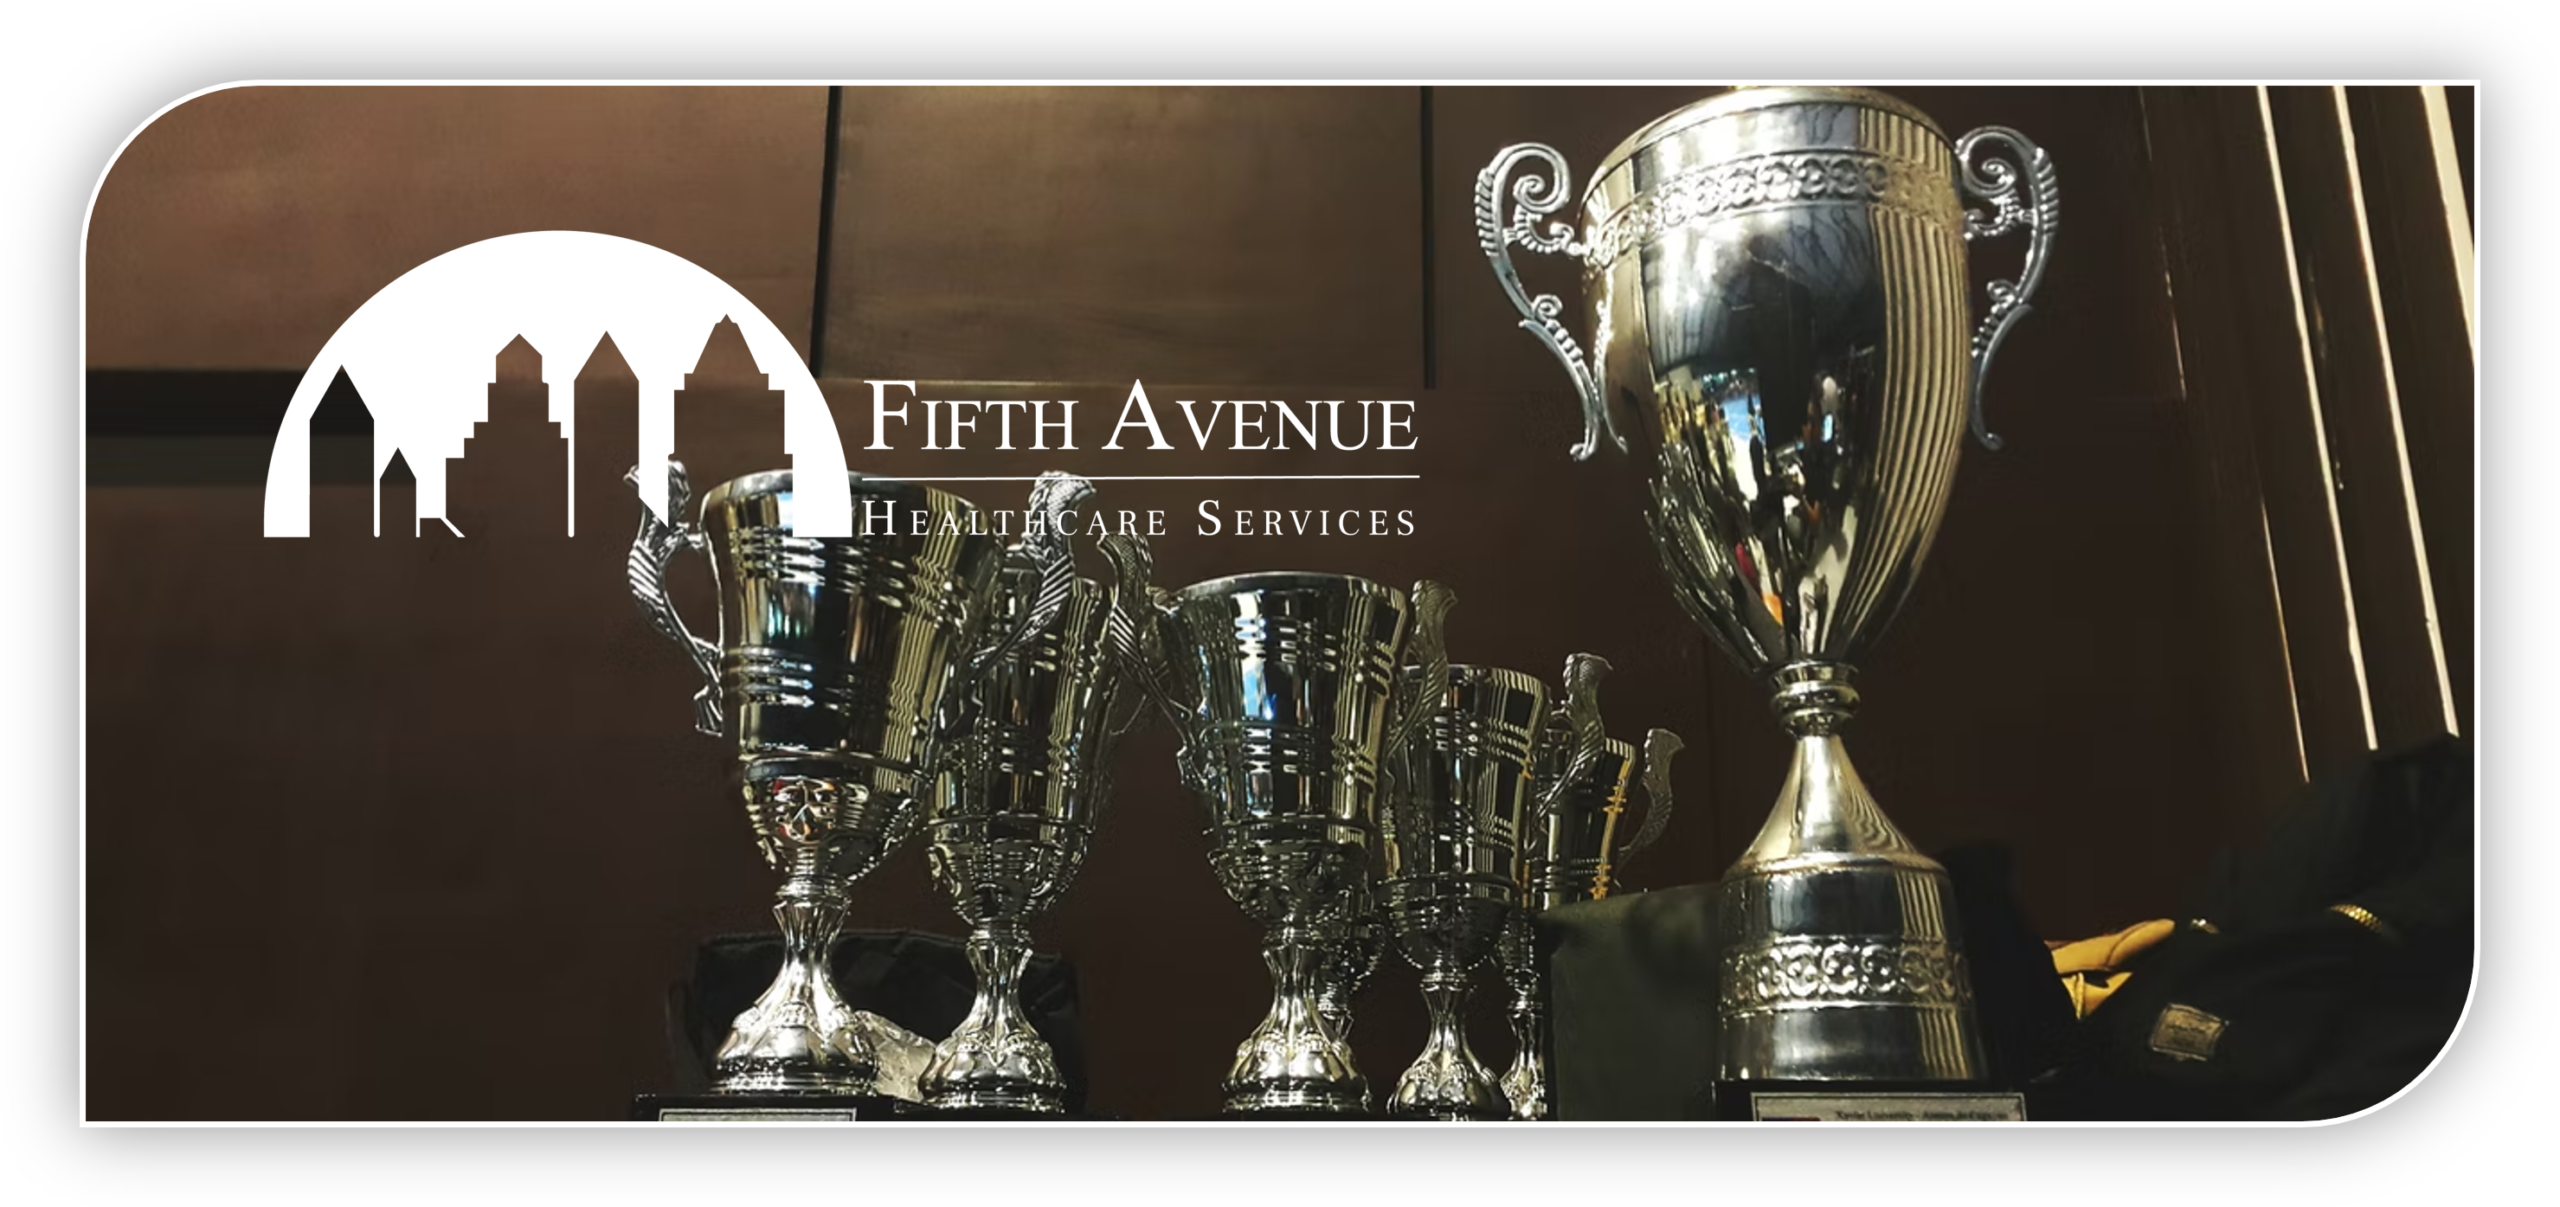 Fifth Avenue Healthcare Services Healthcare AdAward Winner 2022